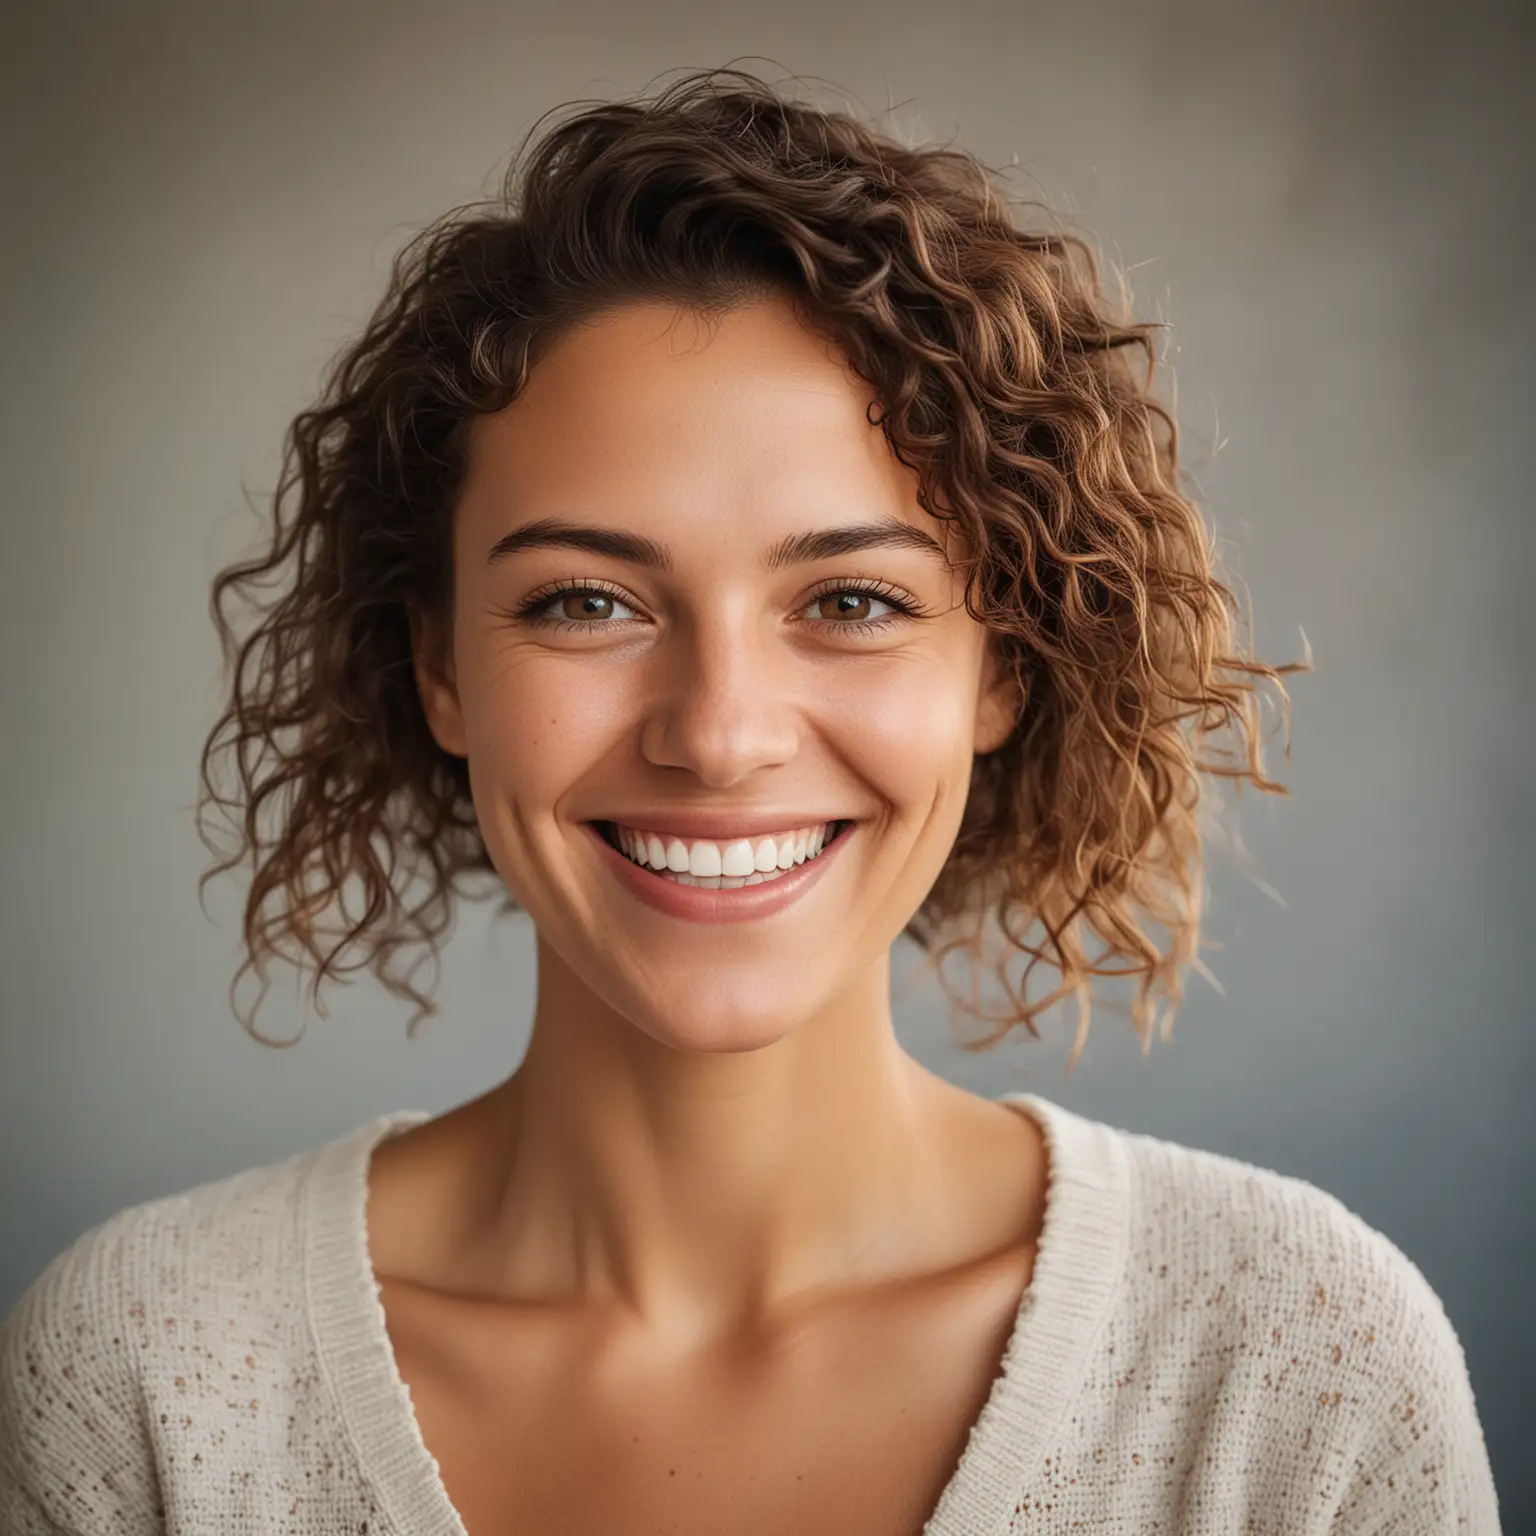 portrait photo of a smiling happy woman